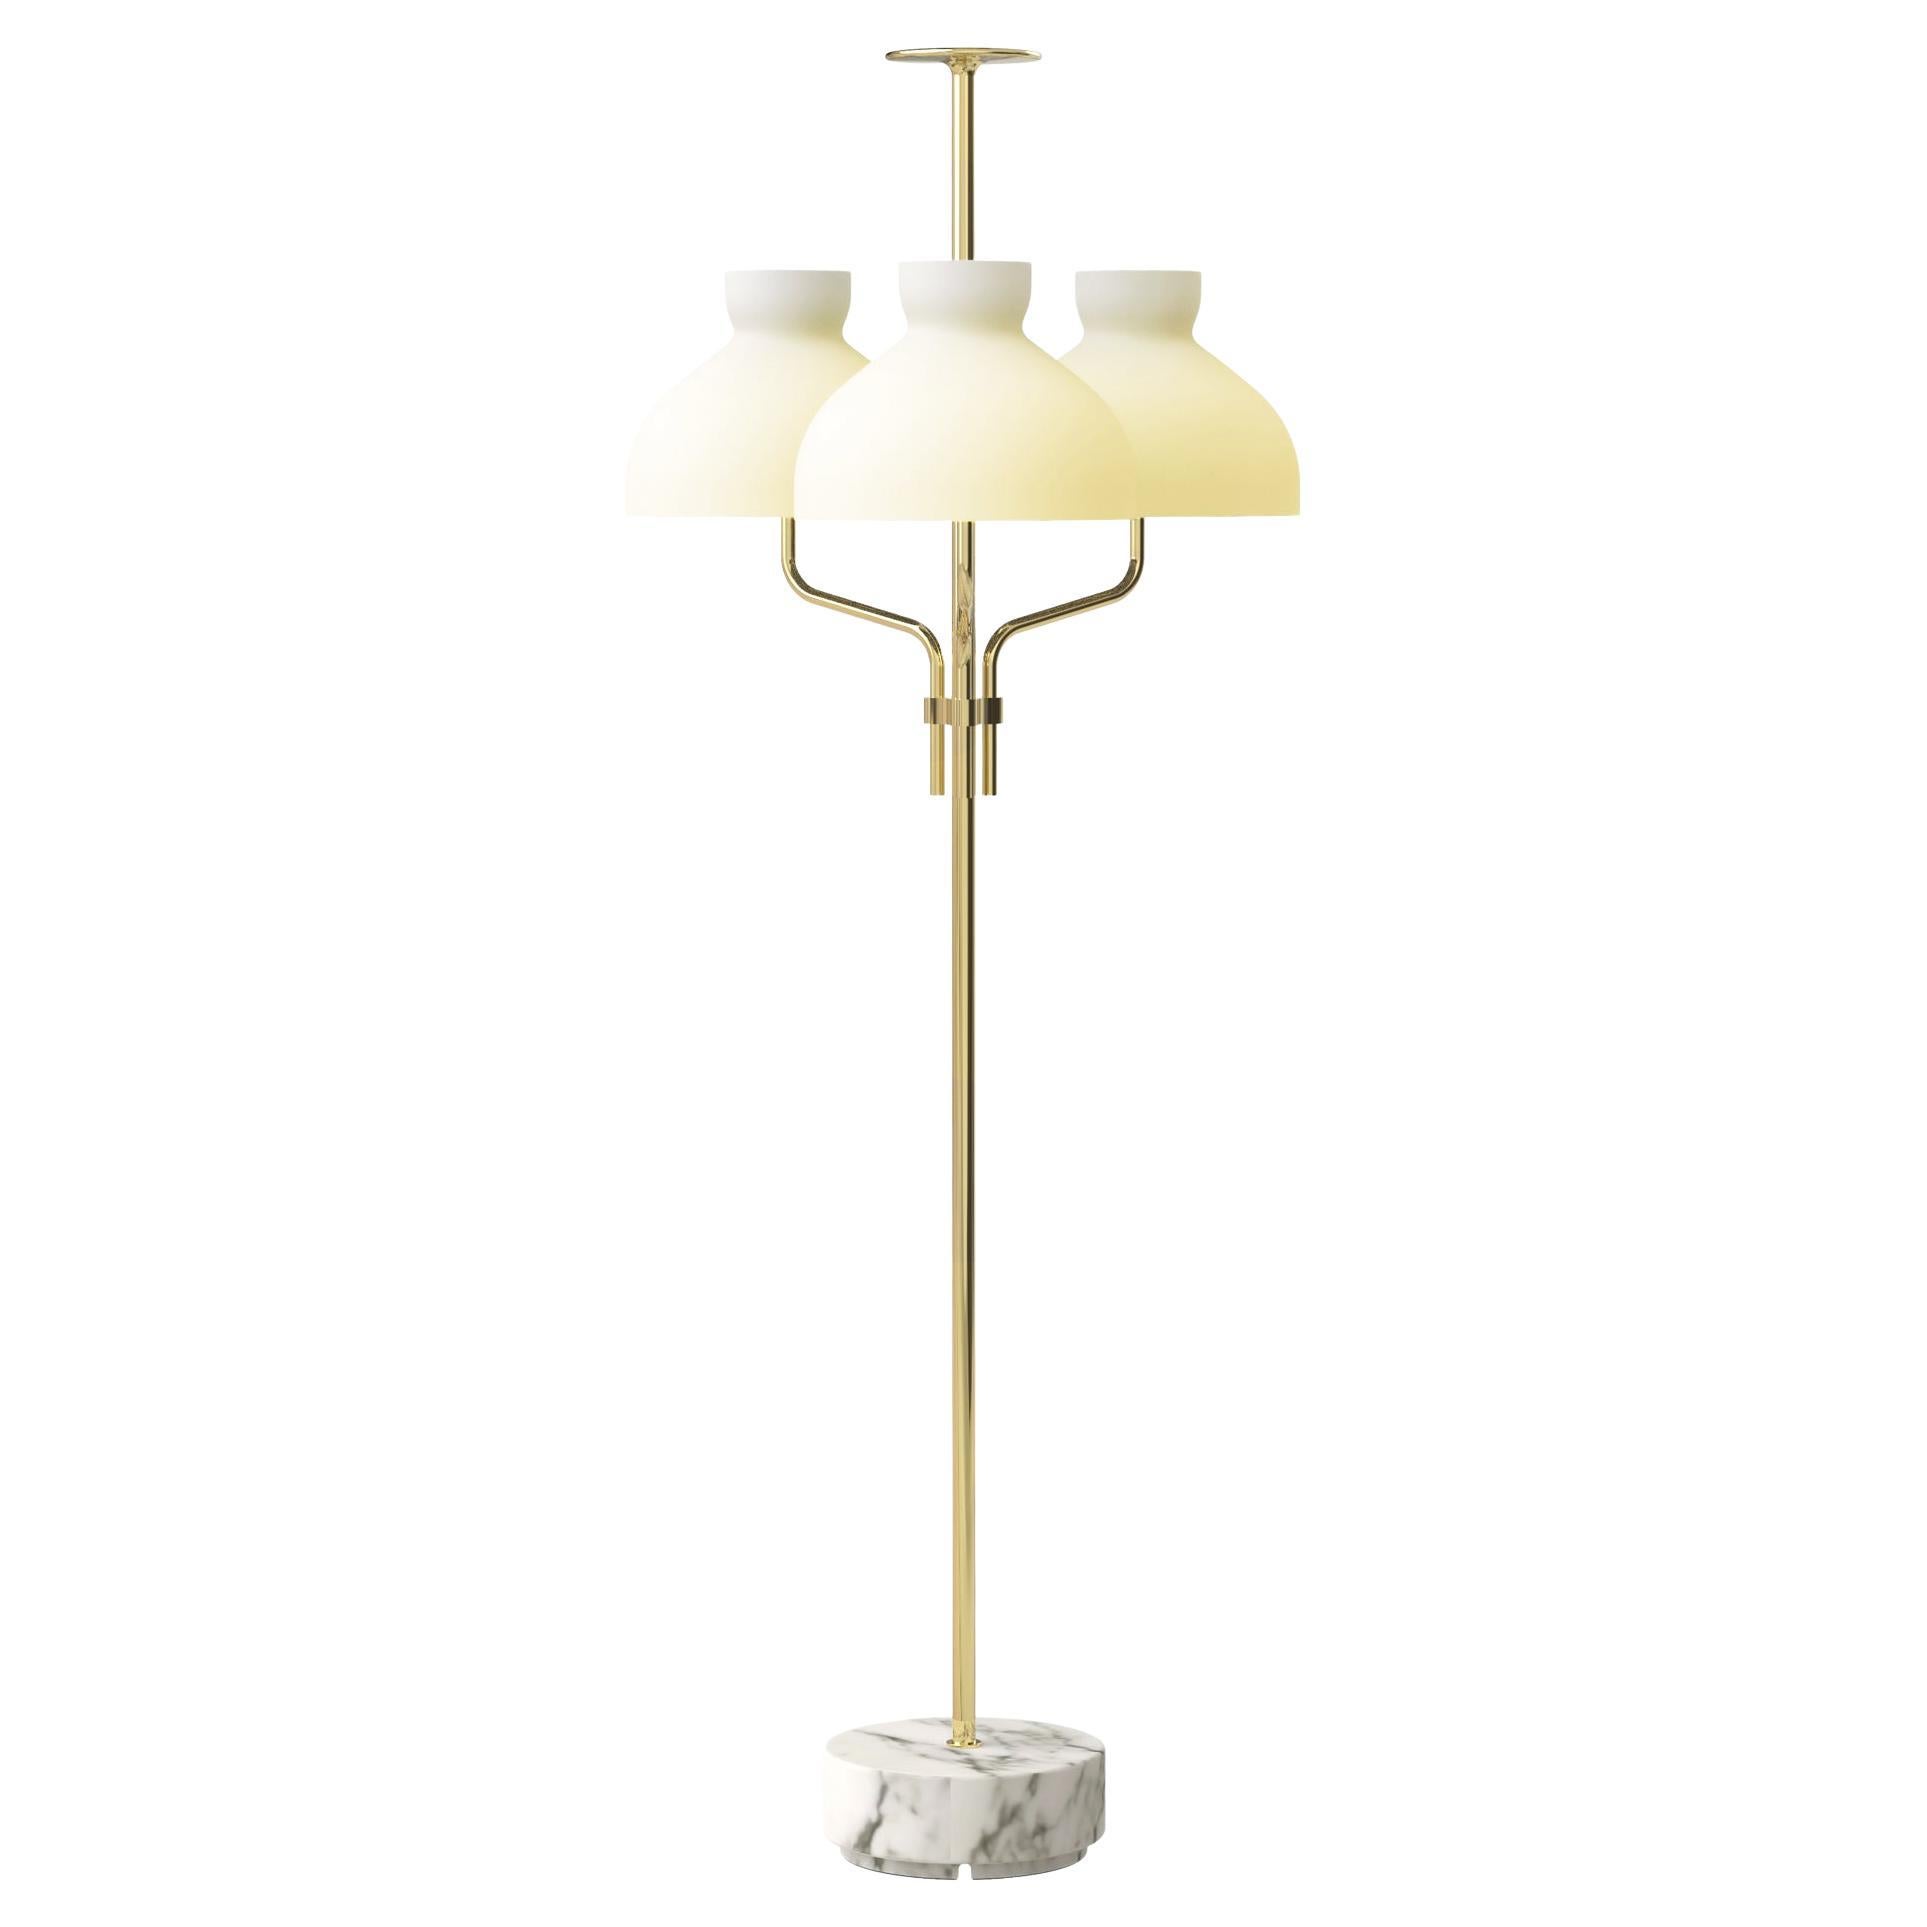 Ignazio Gardella 'Arenzano Tre Fiamme' Floor Lamp in White Marble and Brass For Sale